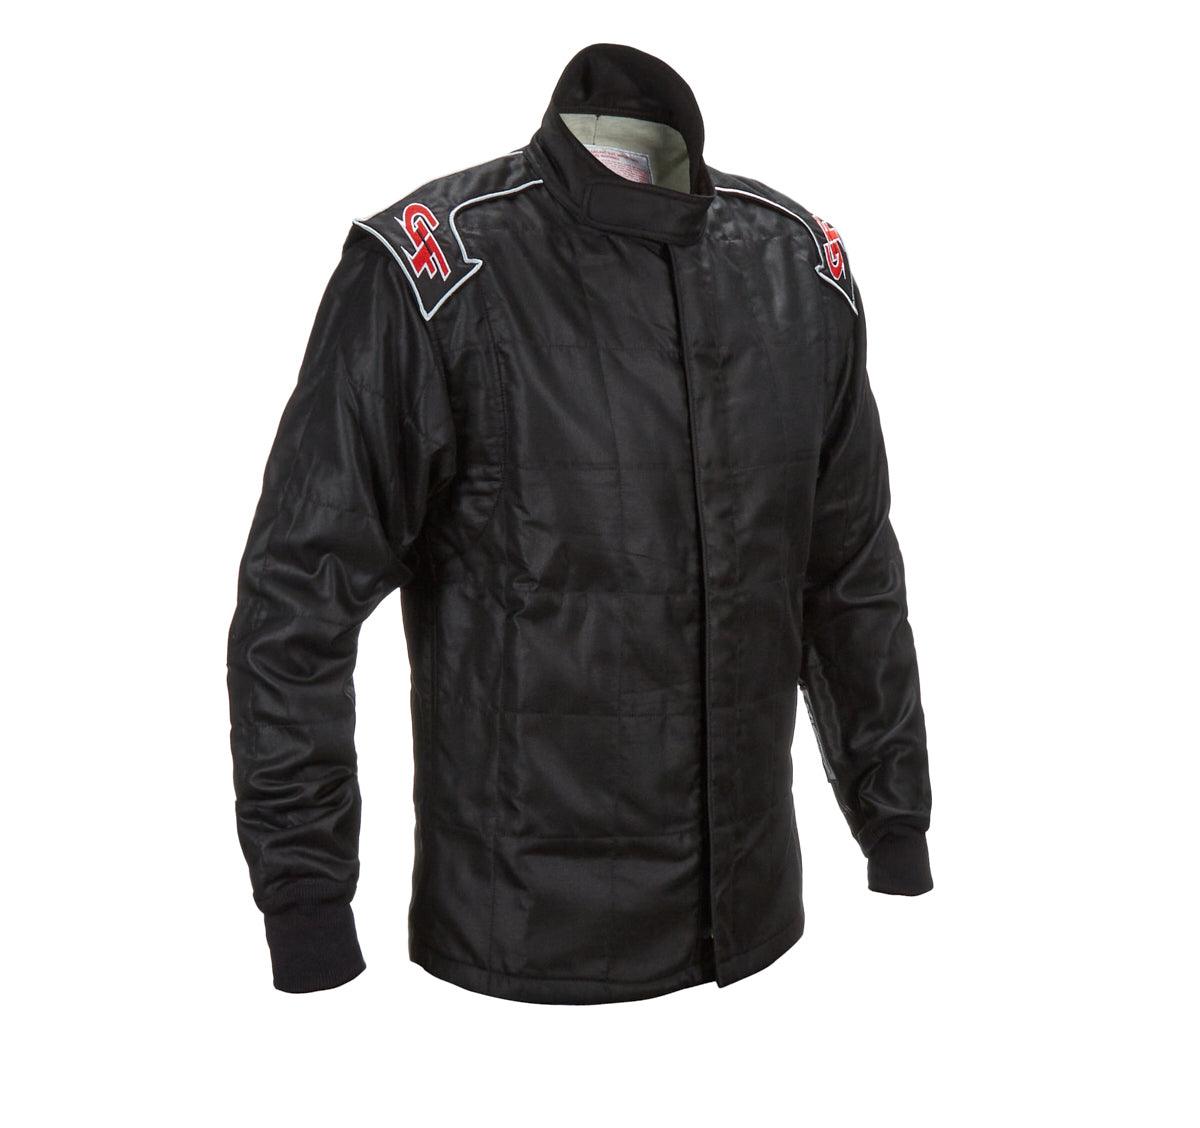 Jacket G-Limit Large Black SFI-5 - Burlile Performance Products